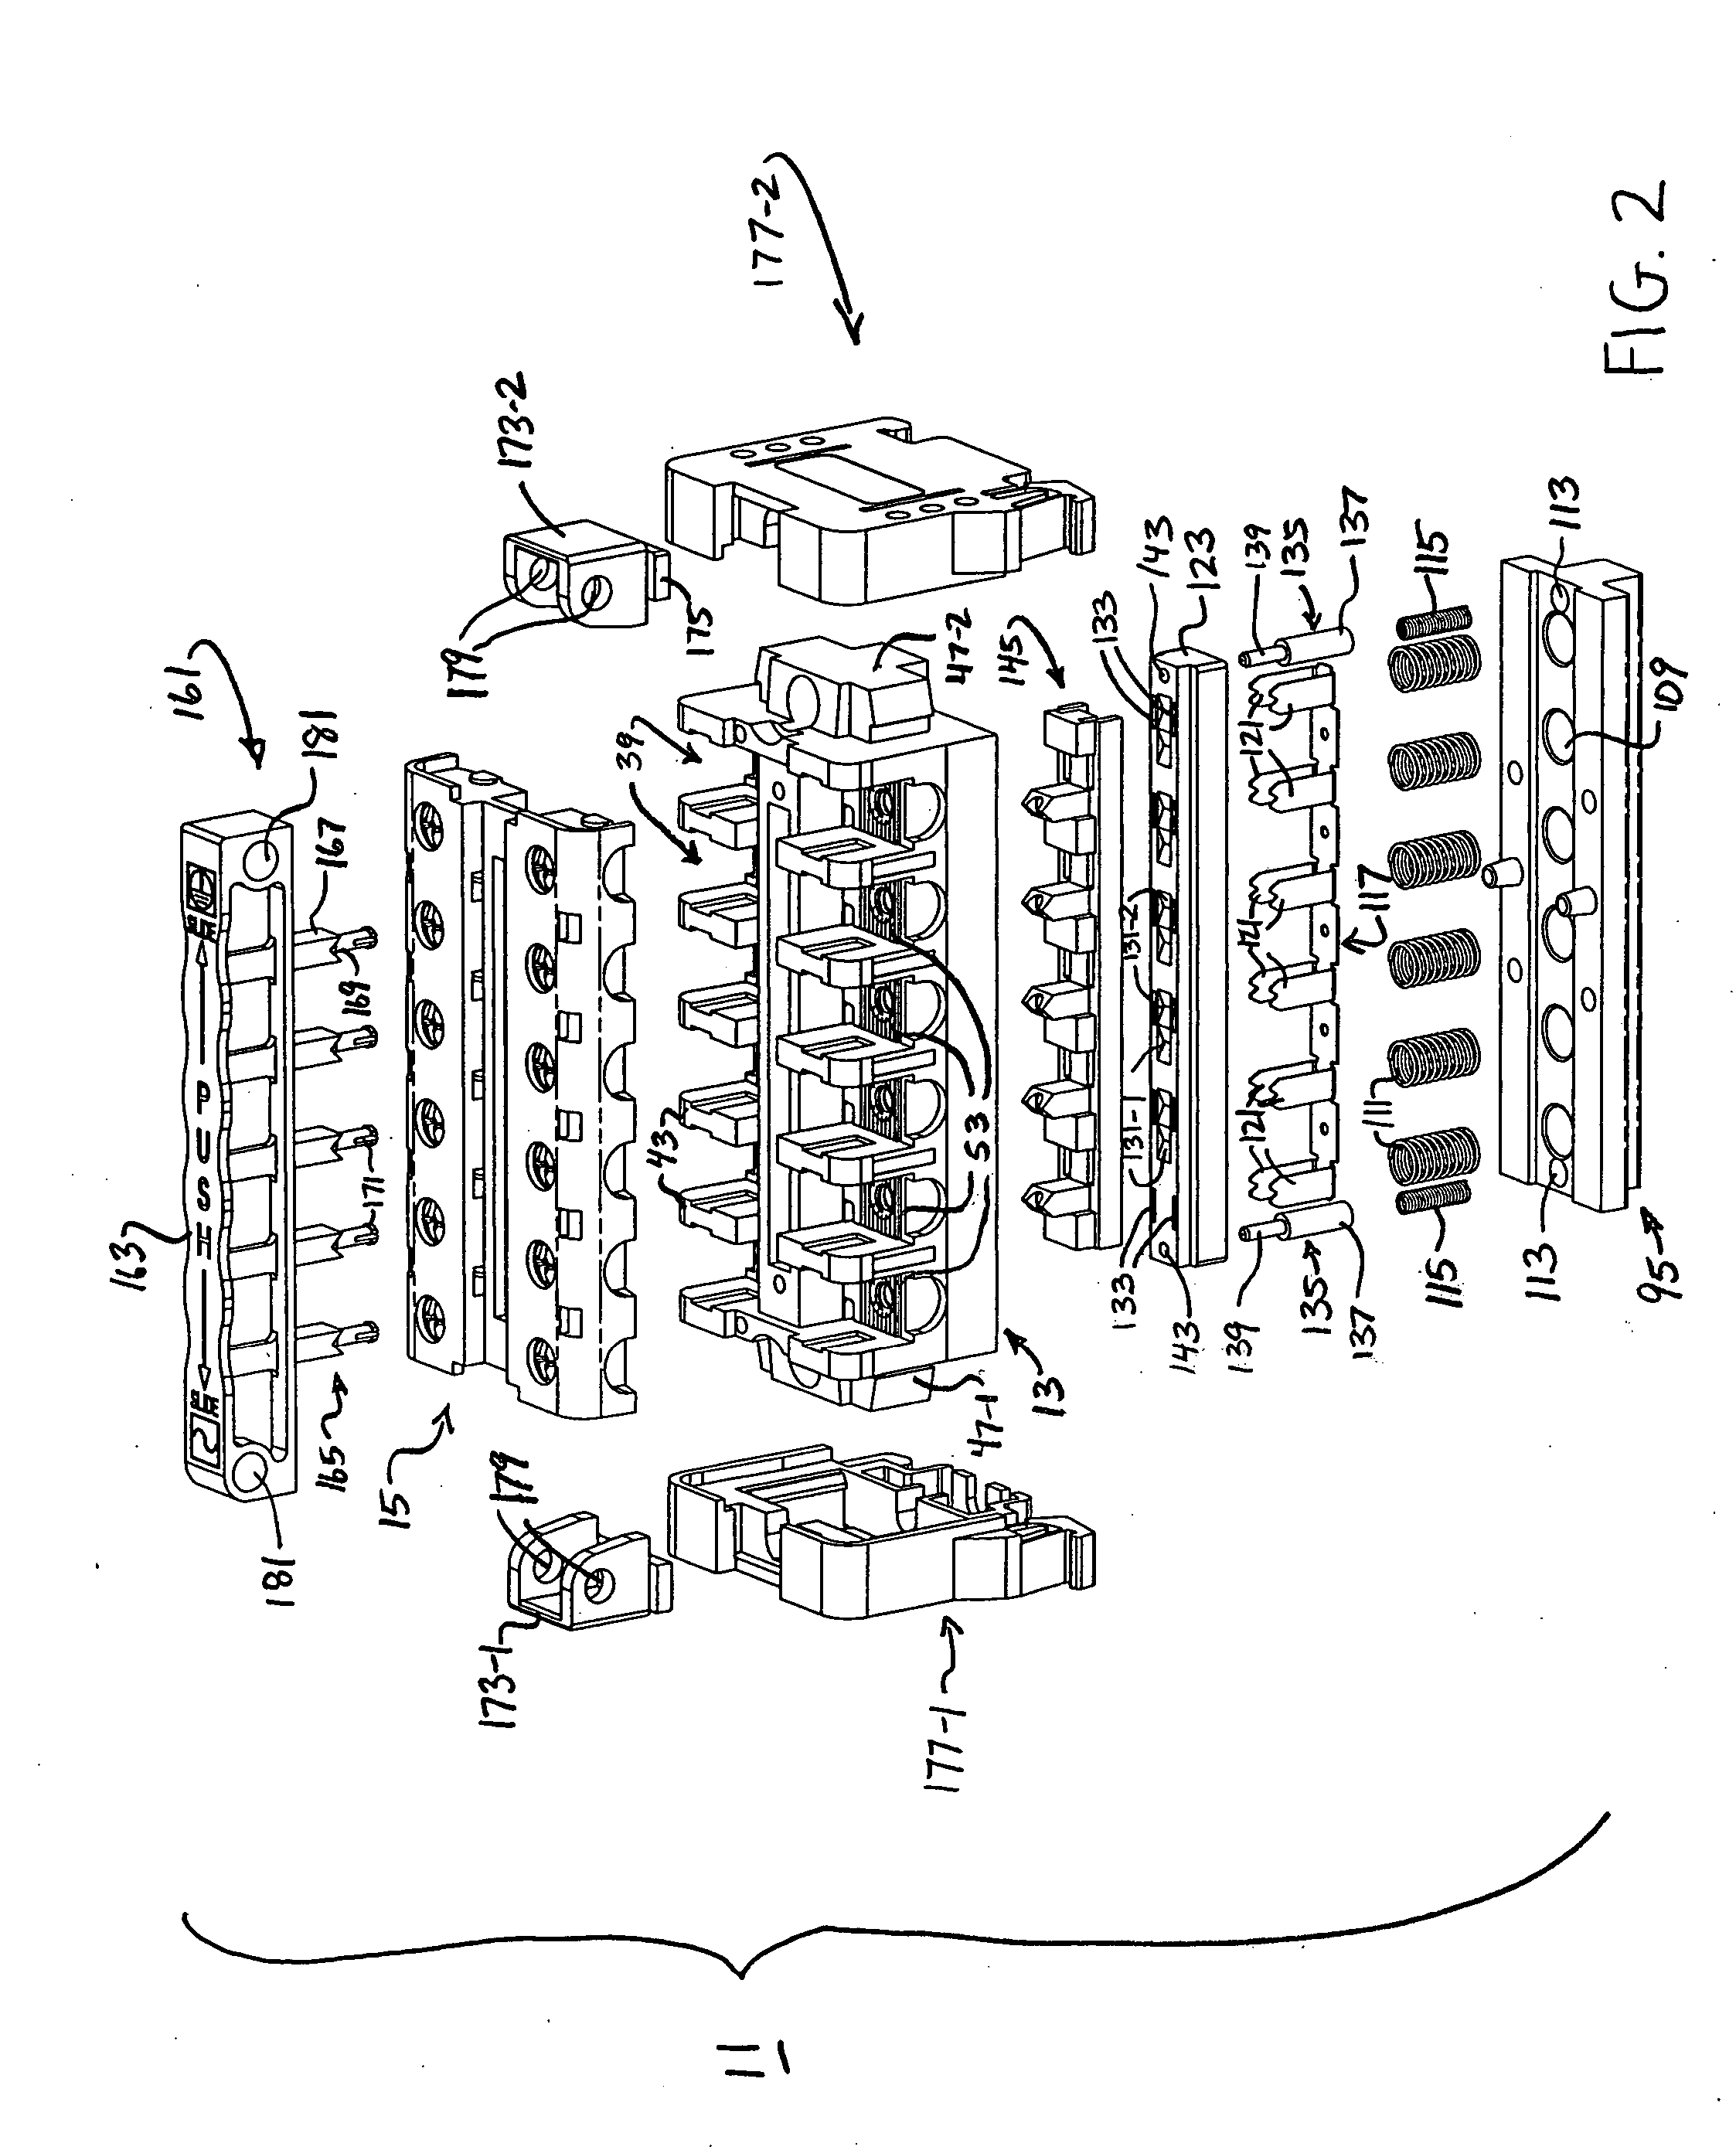 Electrical terminal block